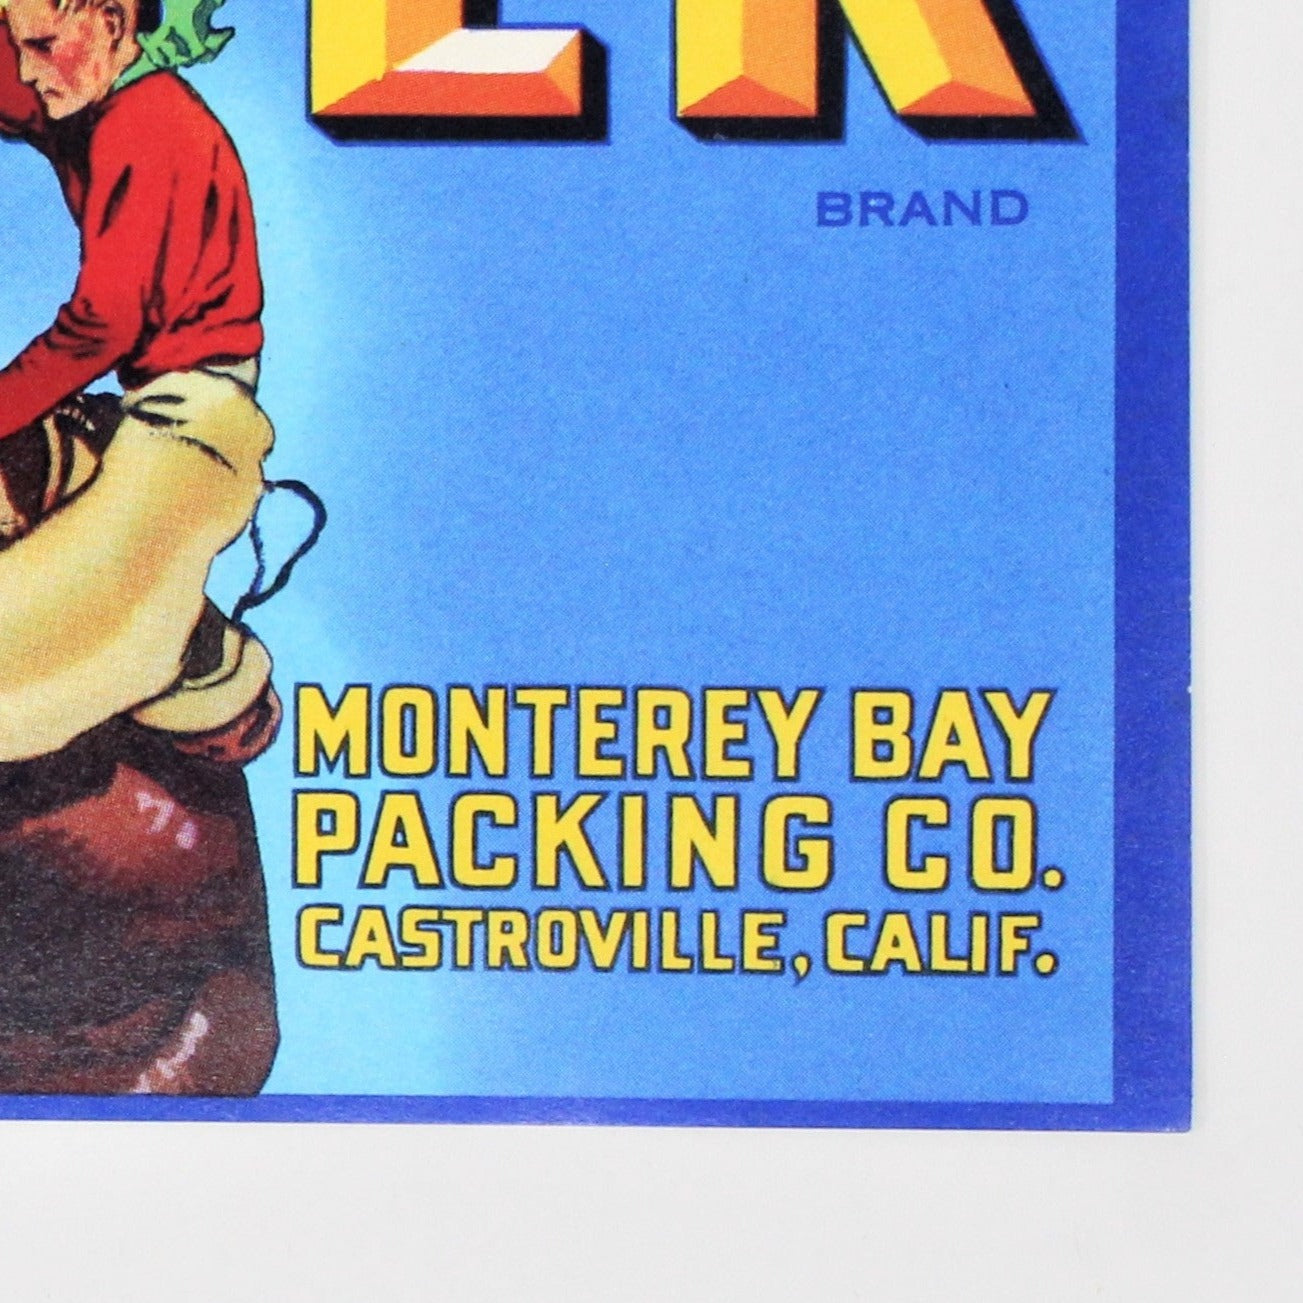 Crate Label, Bronco Buster California Vegetables, Monterey Packaging CA, 7" Vintage, 1940's